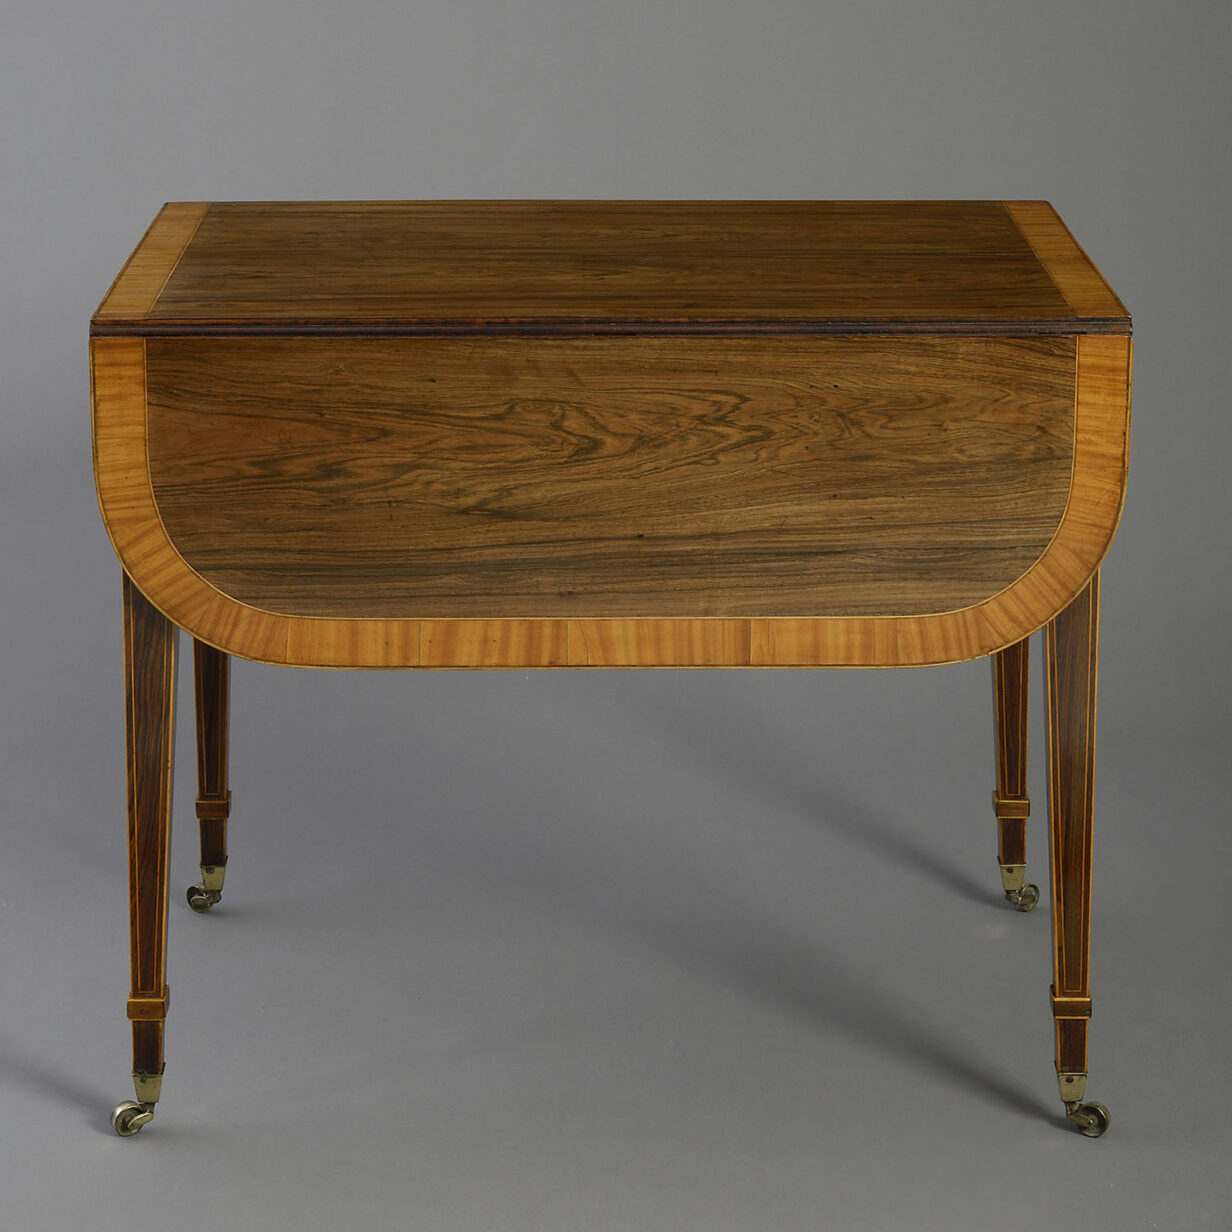 Early 19th century regency period satinwood inlaid rosewood pembroke table